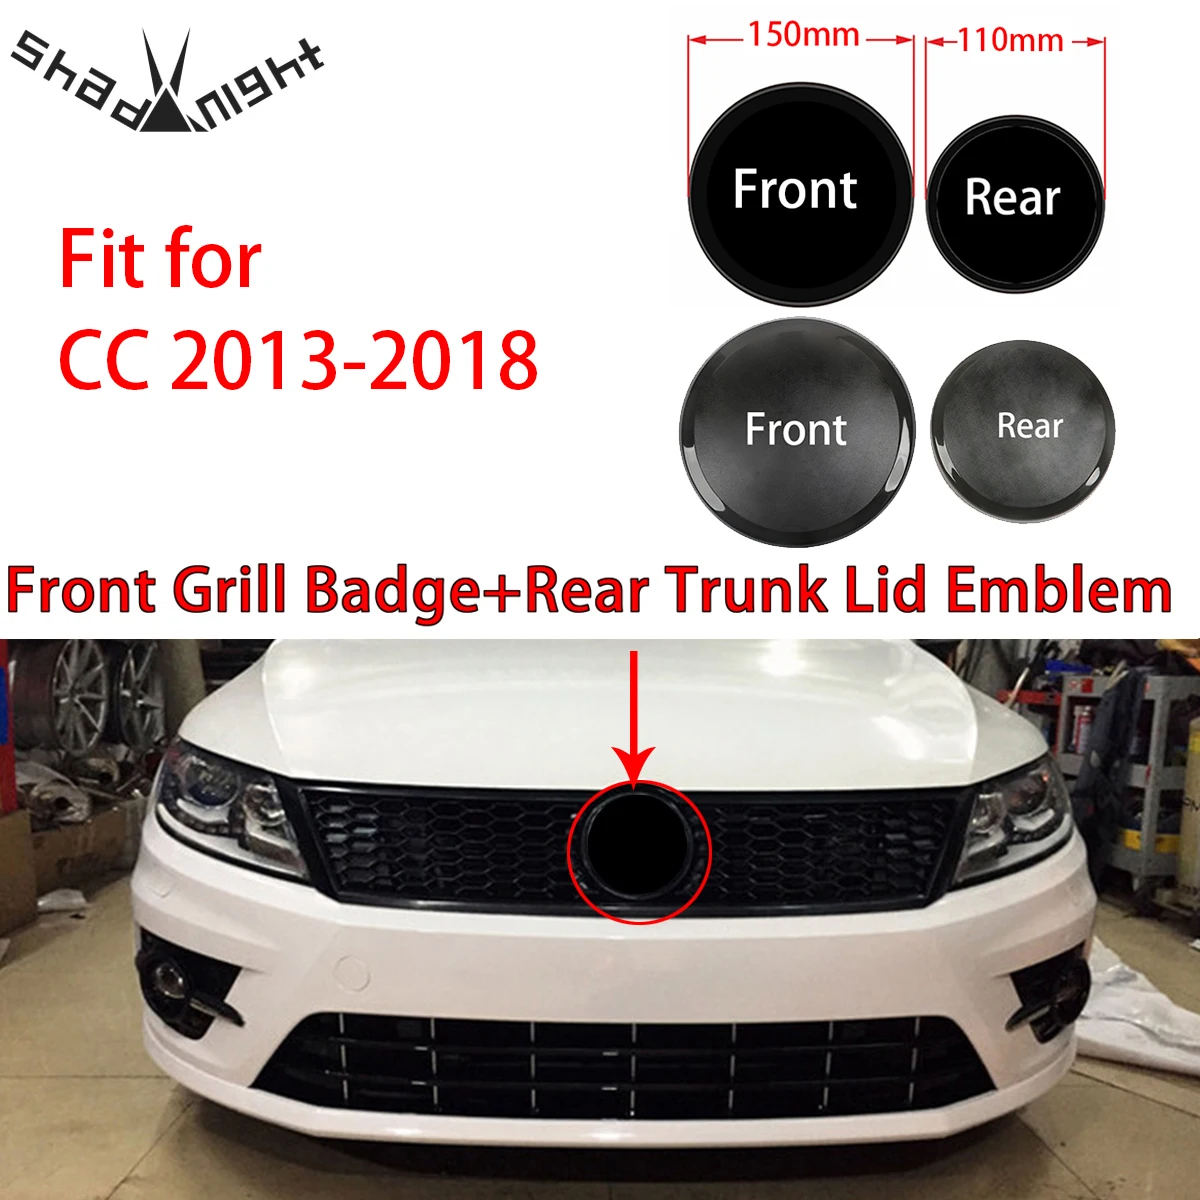 

2PC Gloss Black 150mm Front Grill Badge + 110mm Rear Trunk Lid Emblem Car Logo Fit for CC 2013-2018